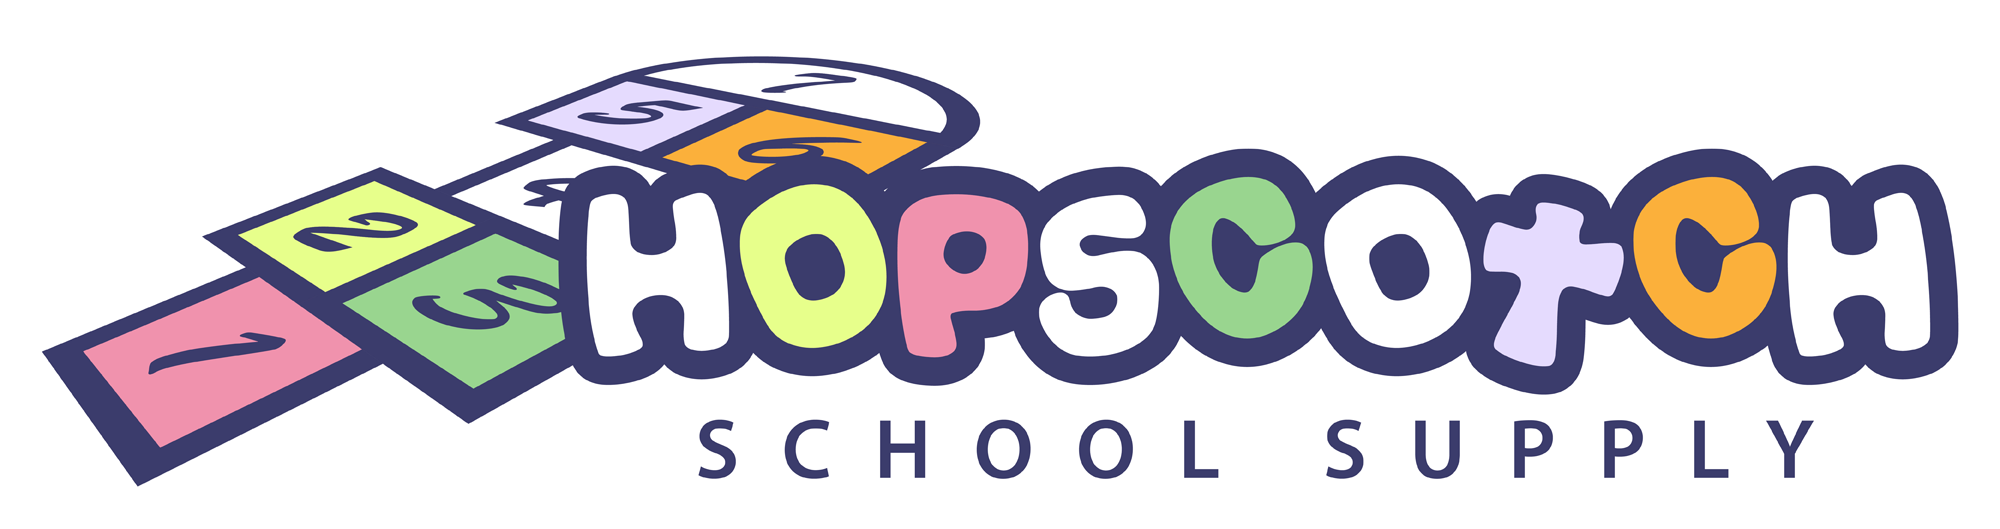 Hopscotch School Supply